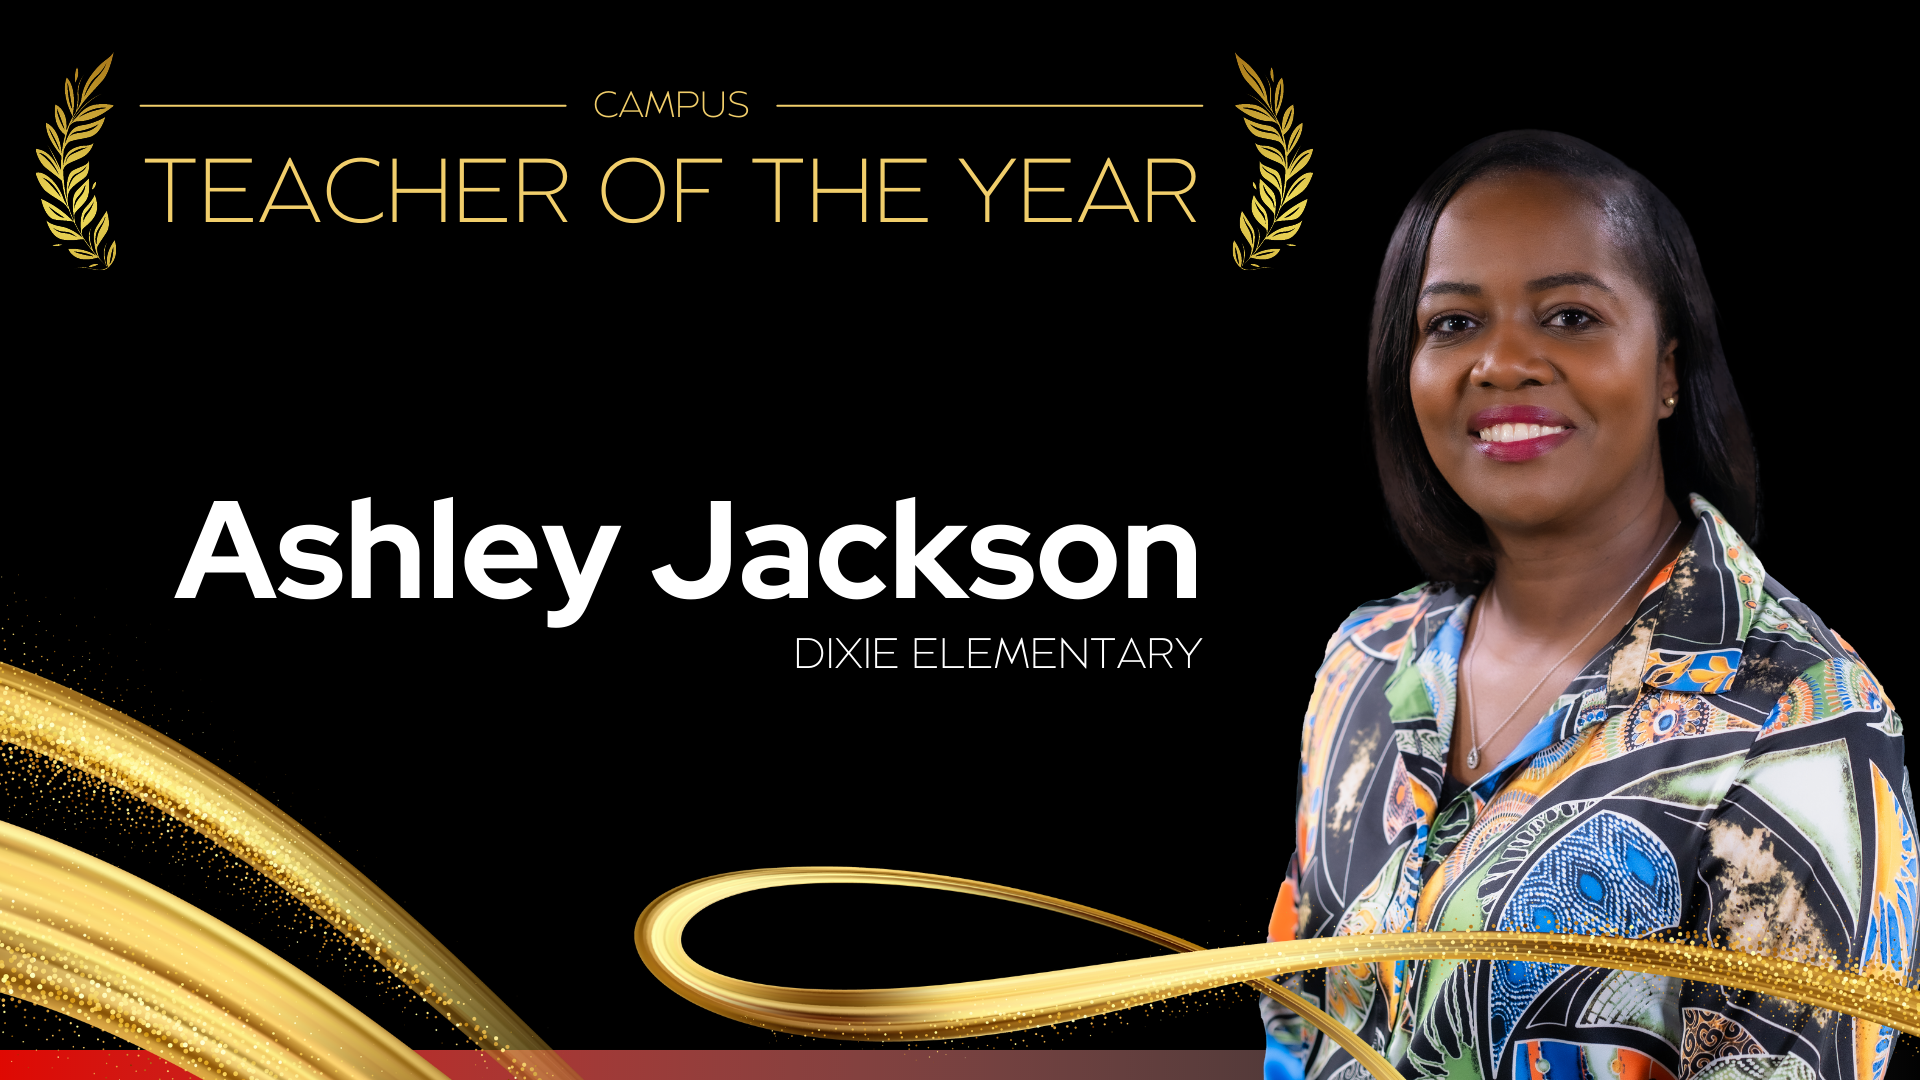 Campus Teacher of the Year Ashley Jackson - Dixie Elementary